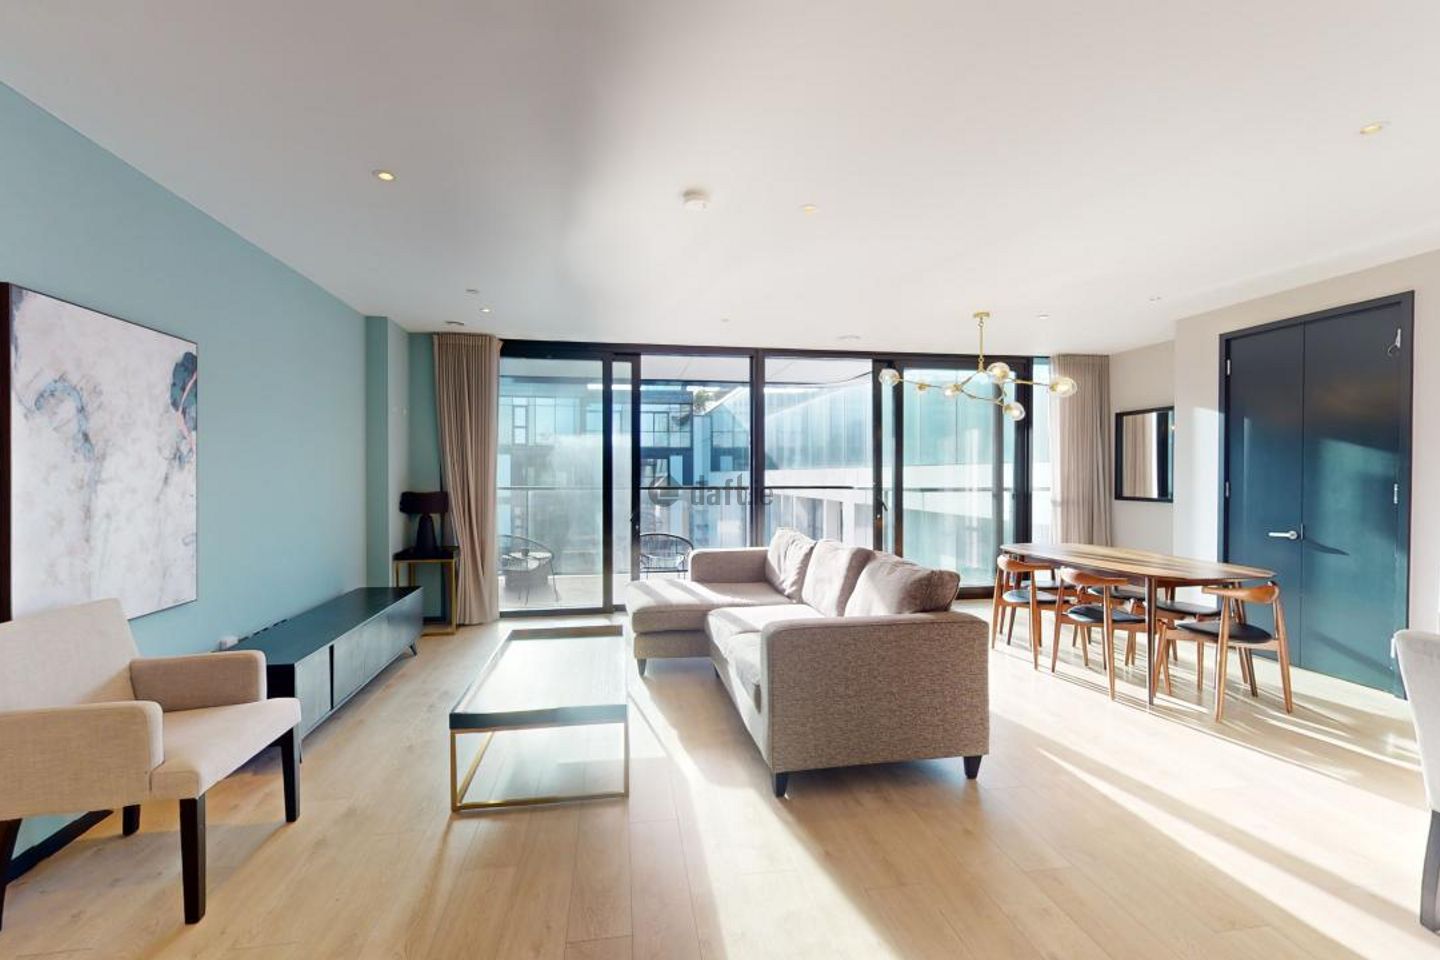 Three bedroom apartment @ OPUS, 6 Hanover Quay, Grand Canal Dock, Dublin 2